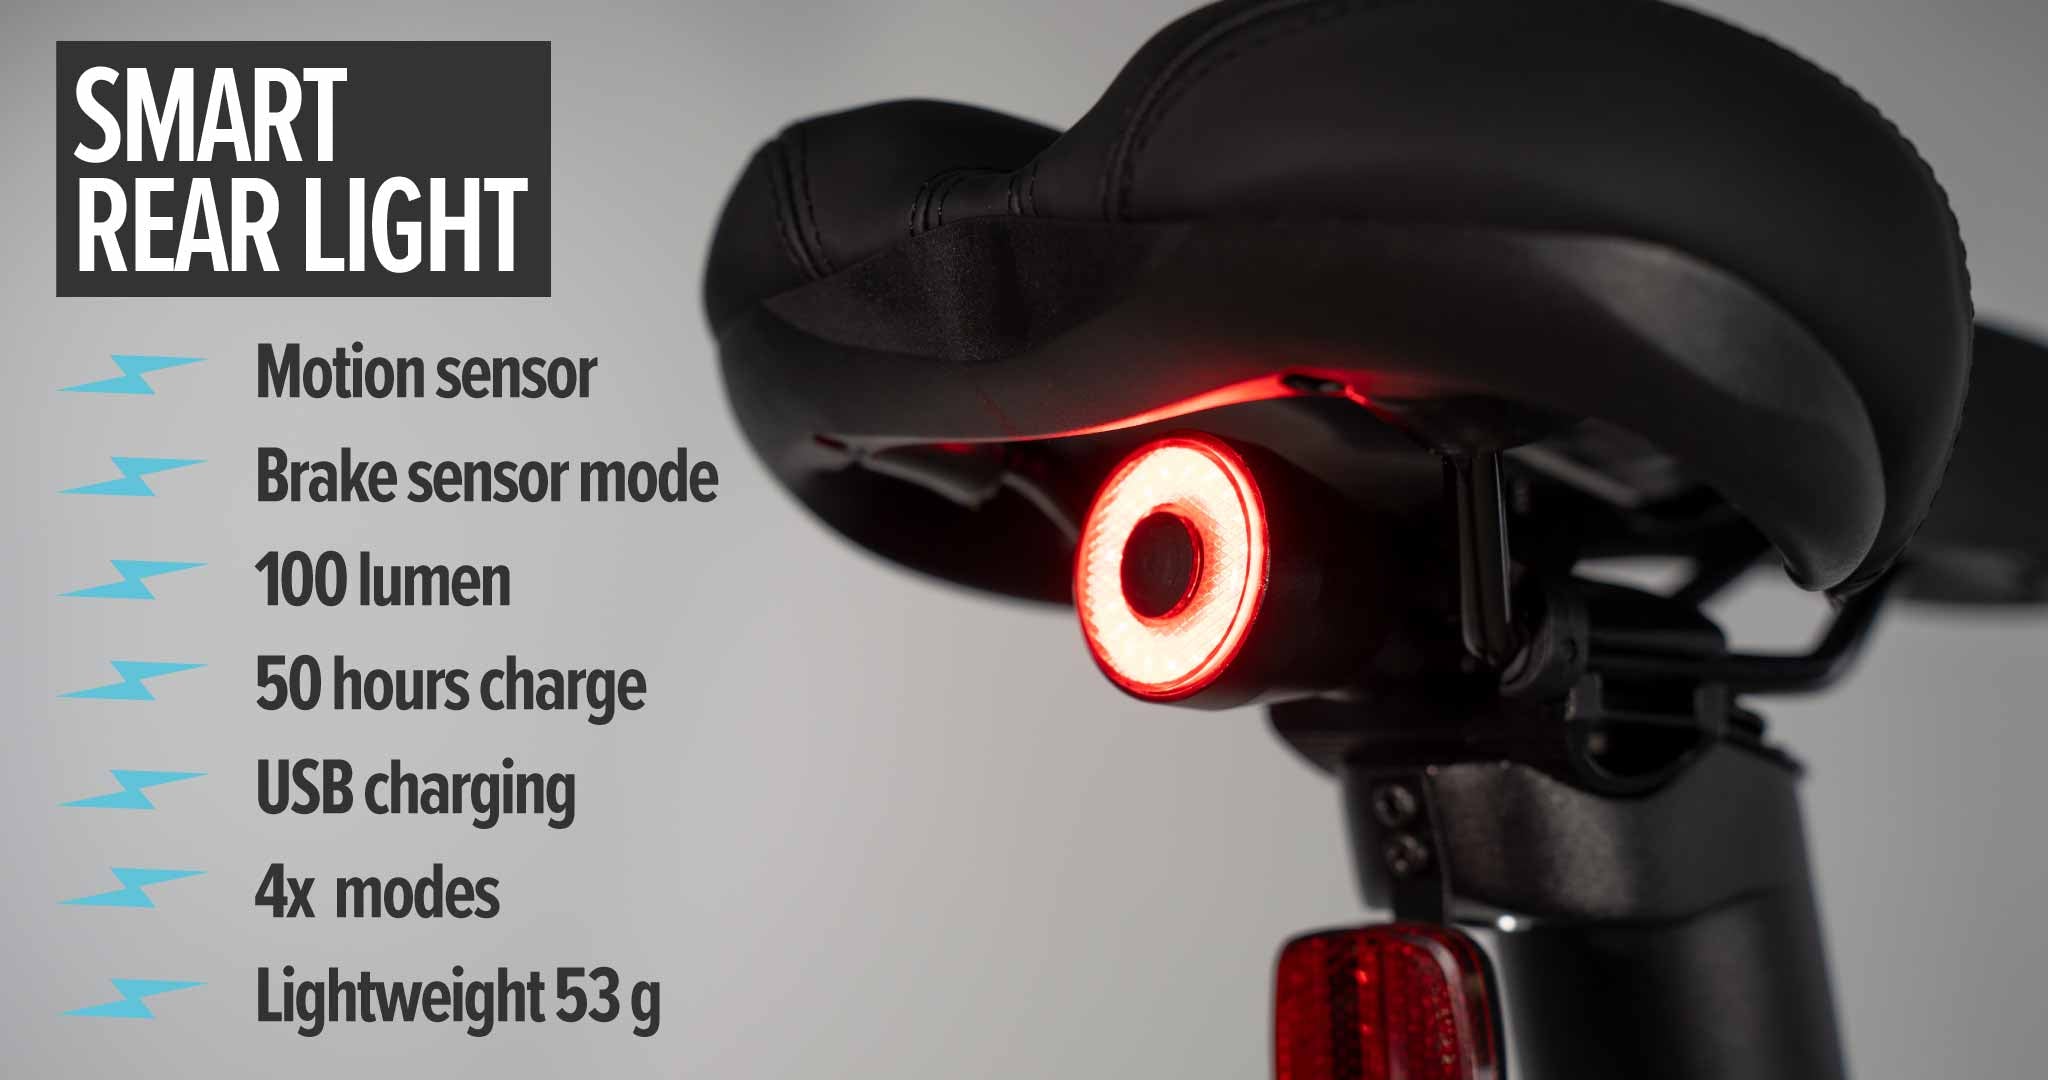 The Estarli smart rear light with motion sensor and brake sensor mode